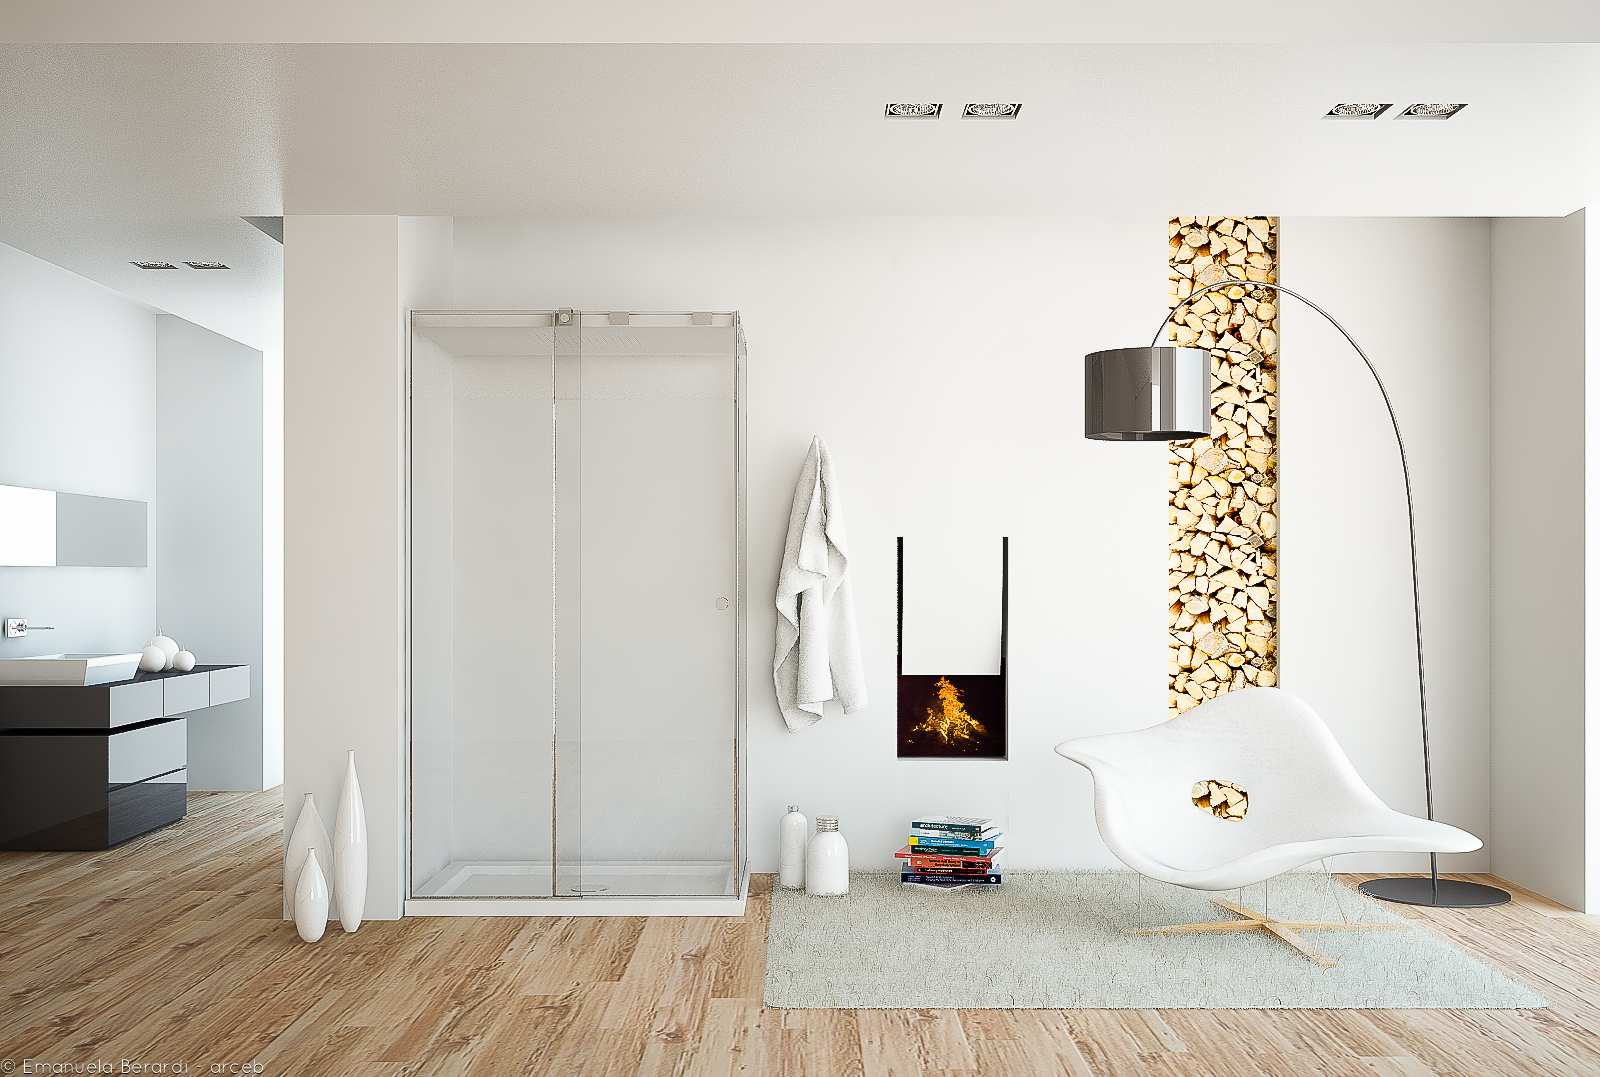 A bathroom with a fireplace